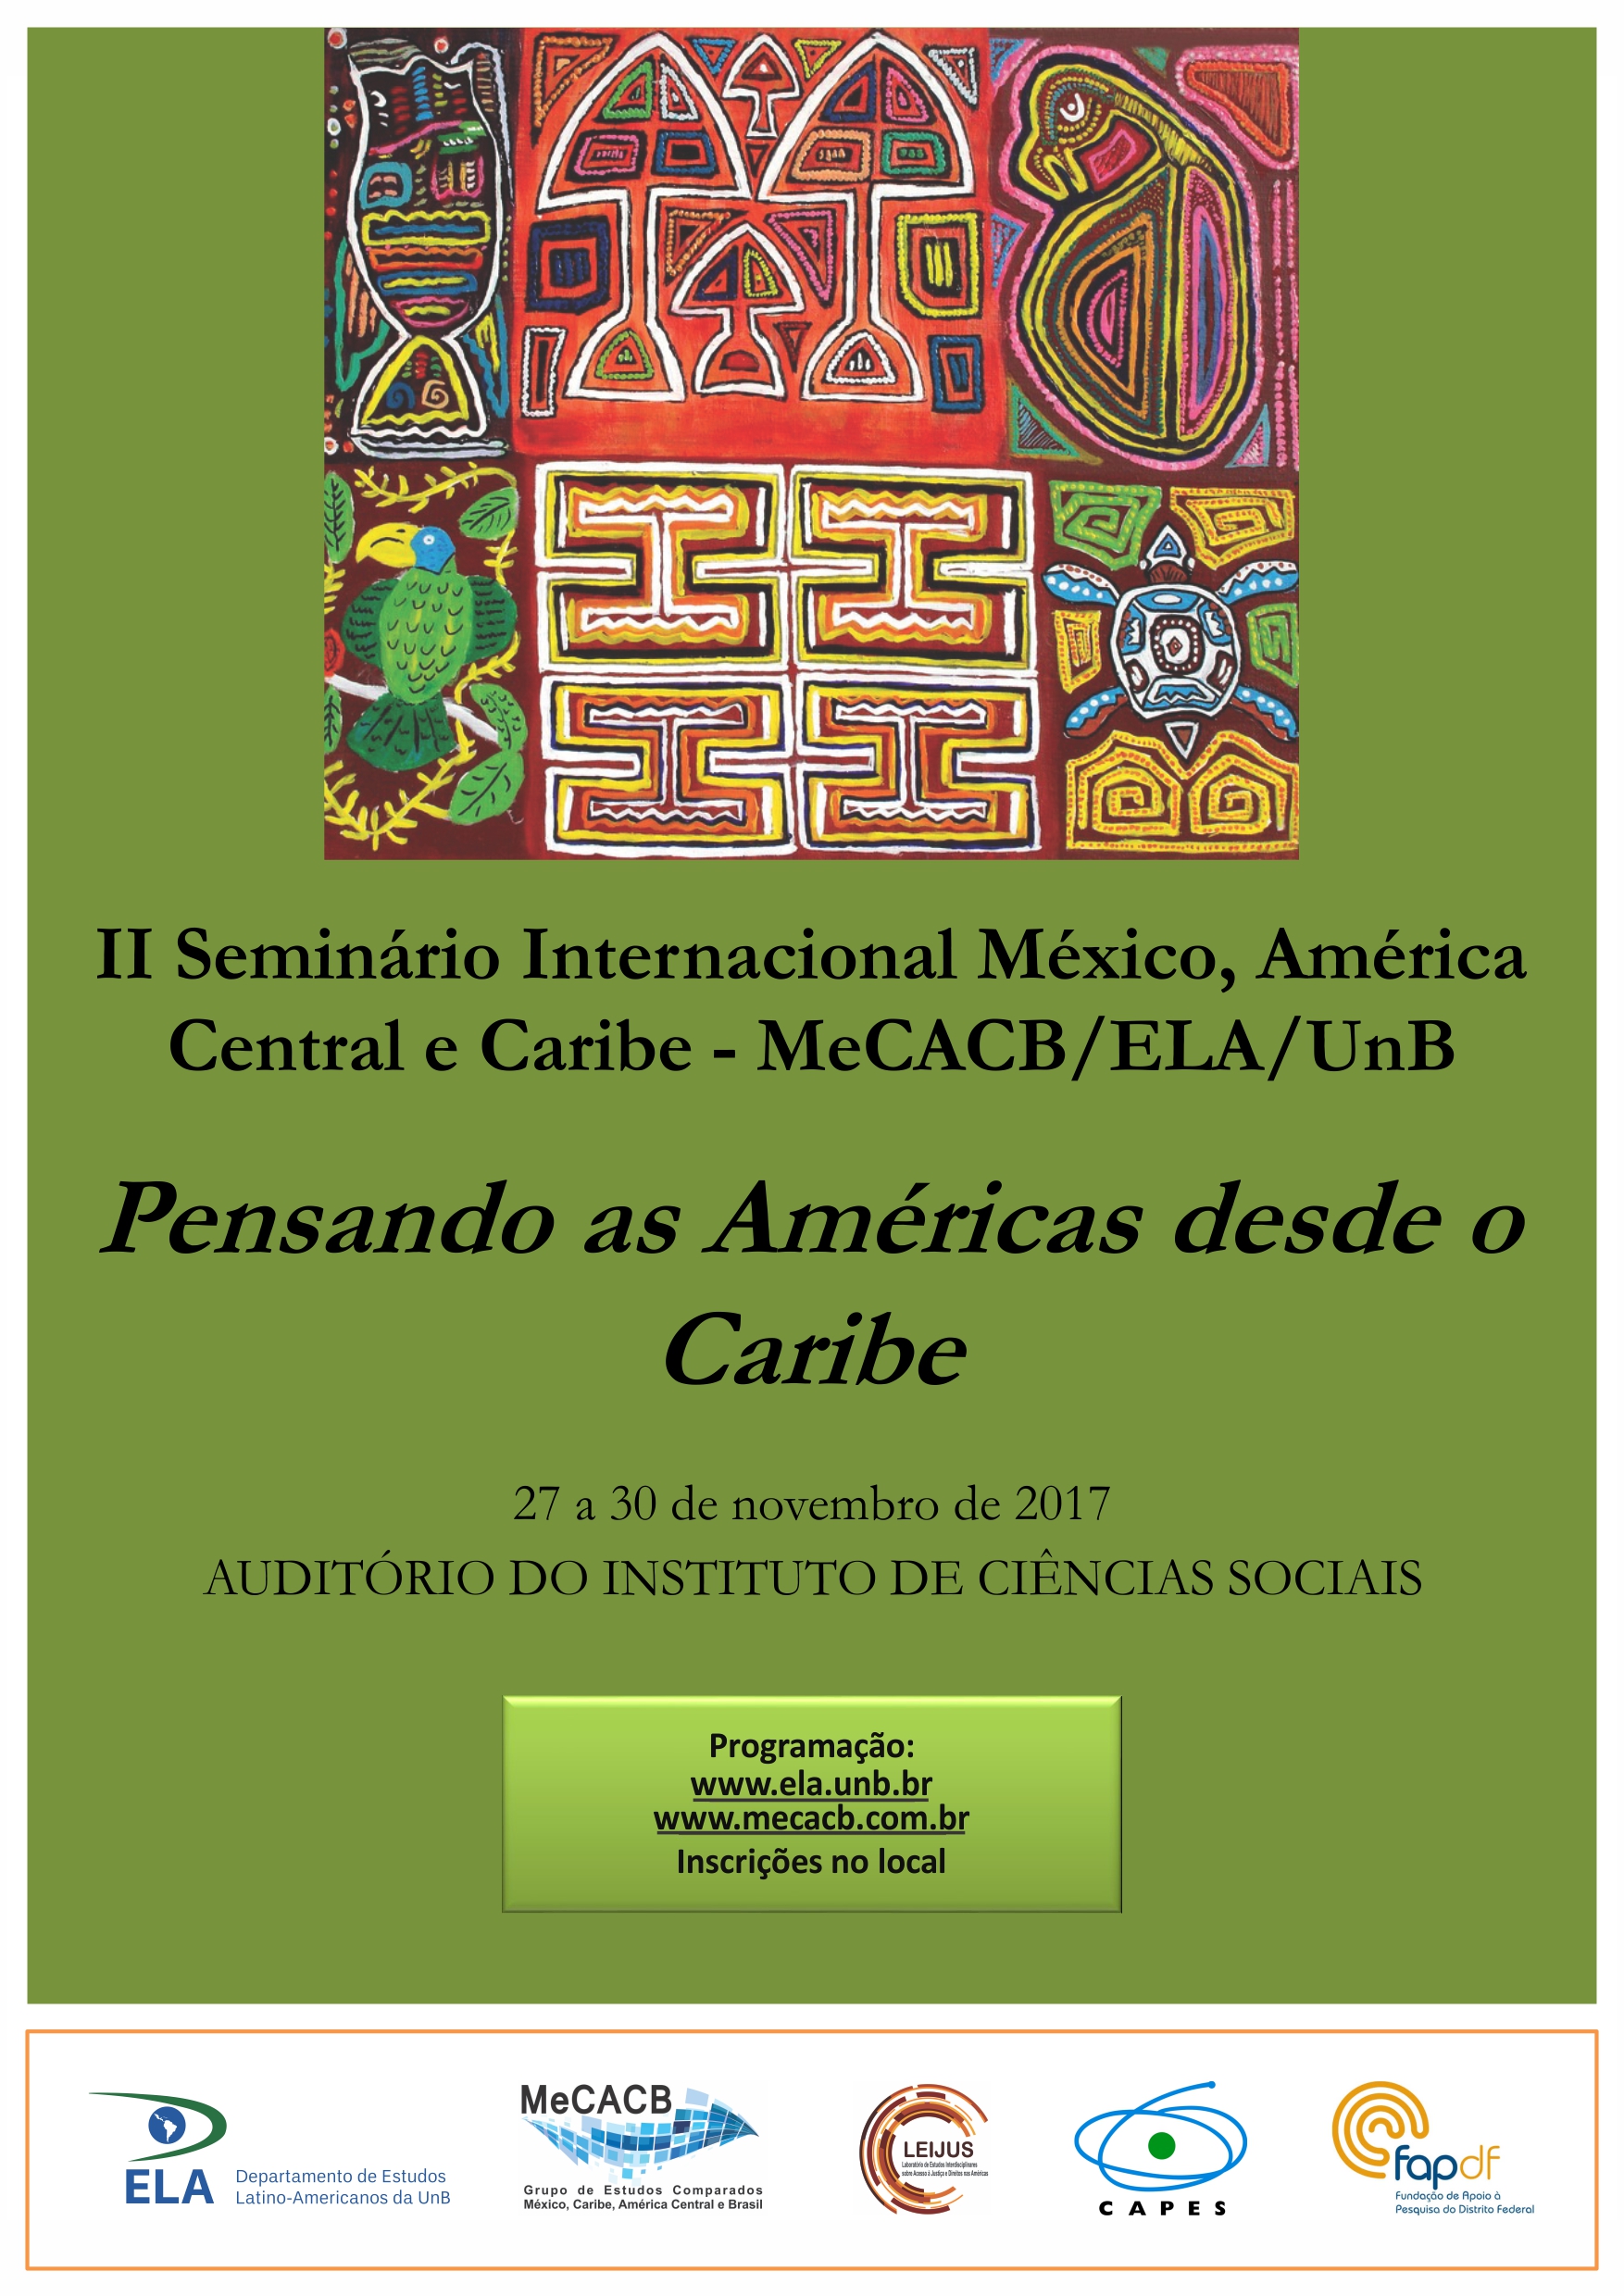 II Seminário Internacional México, América Central e Caribe